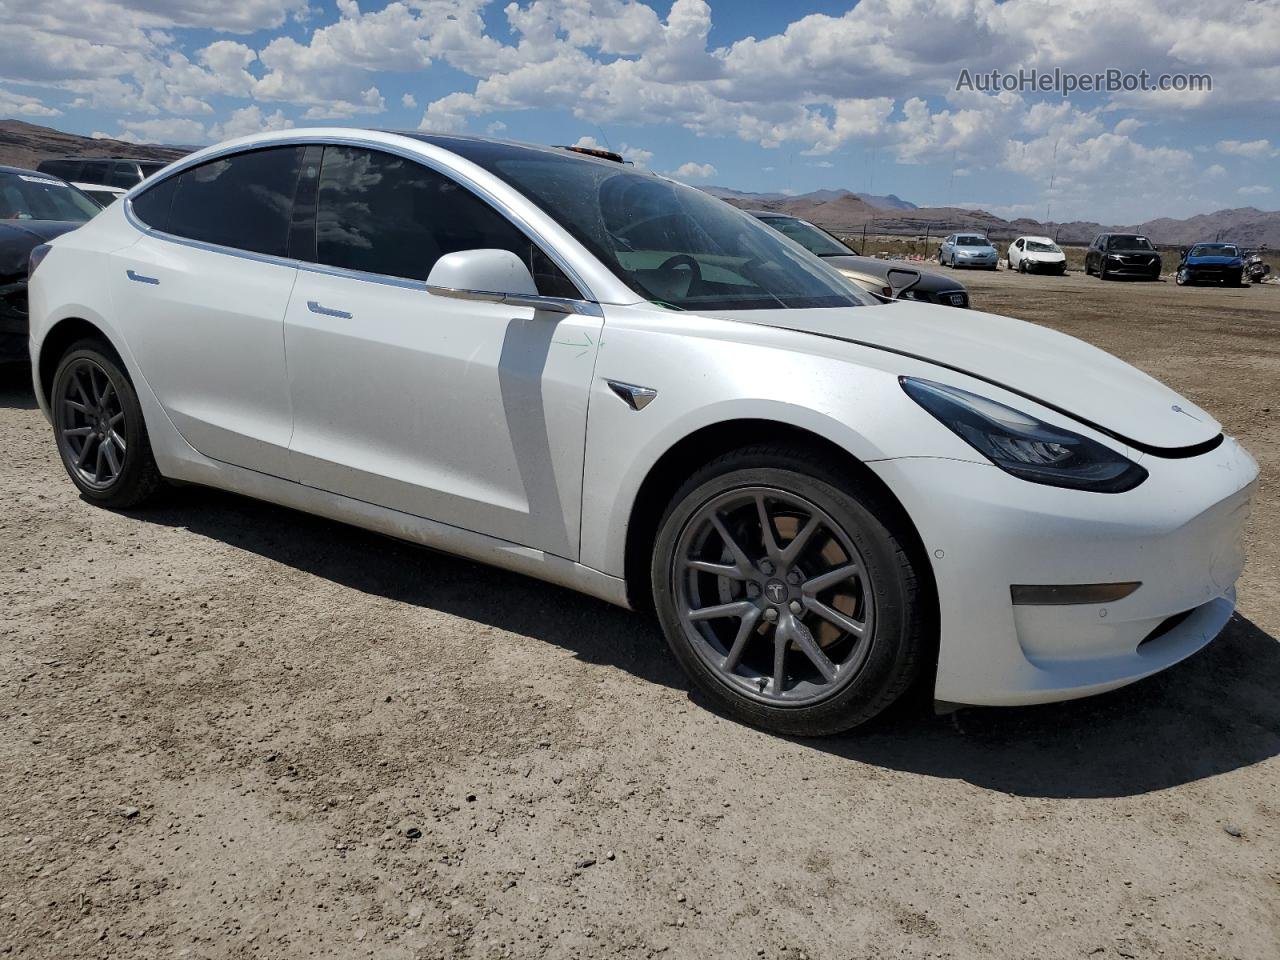 2020 Tesla Model 3  Белый vin: 5YJ3E1EA4LF615243